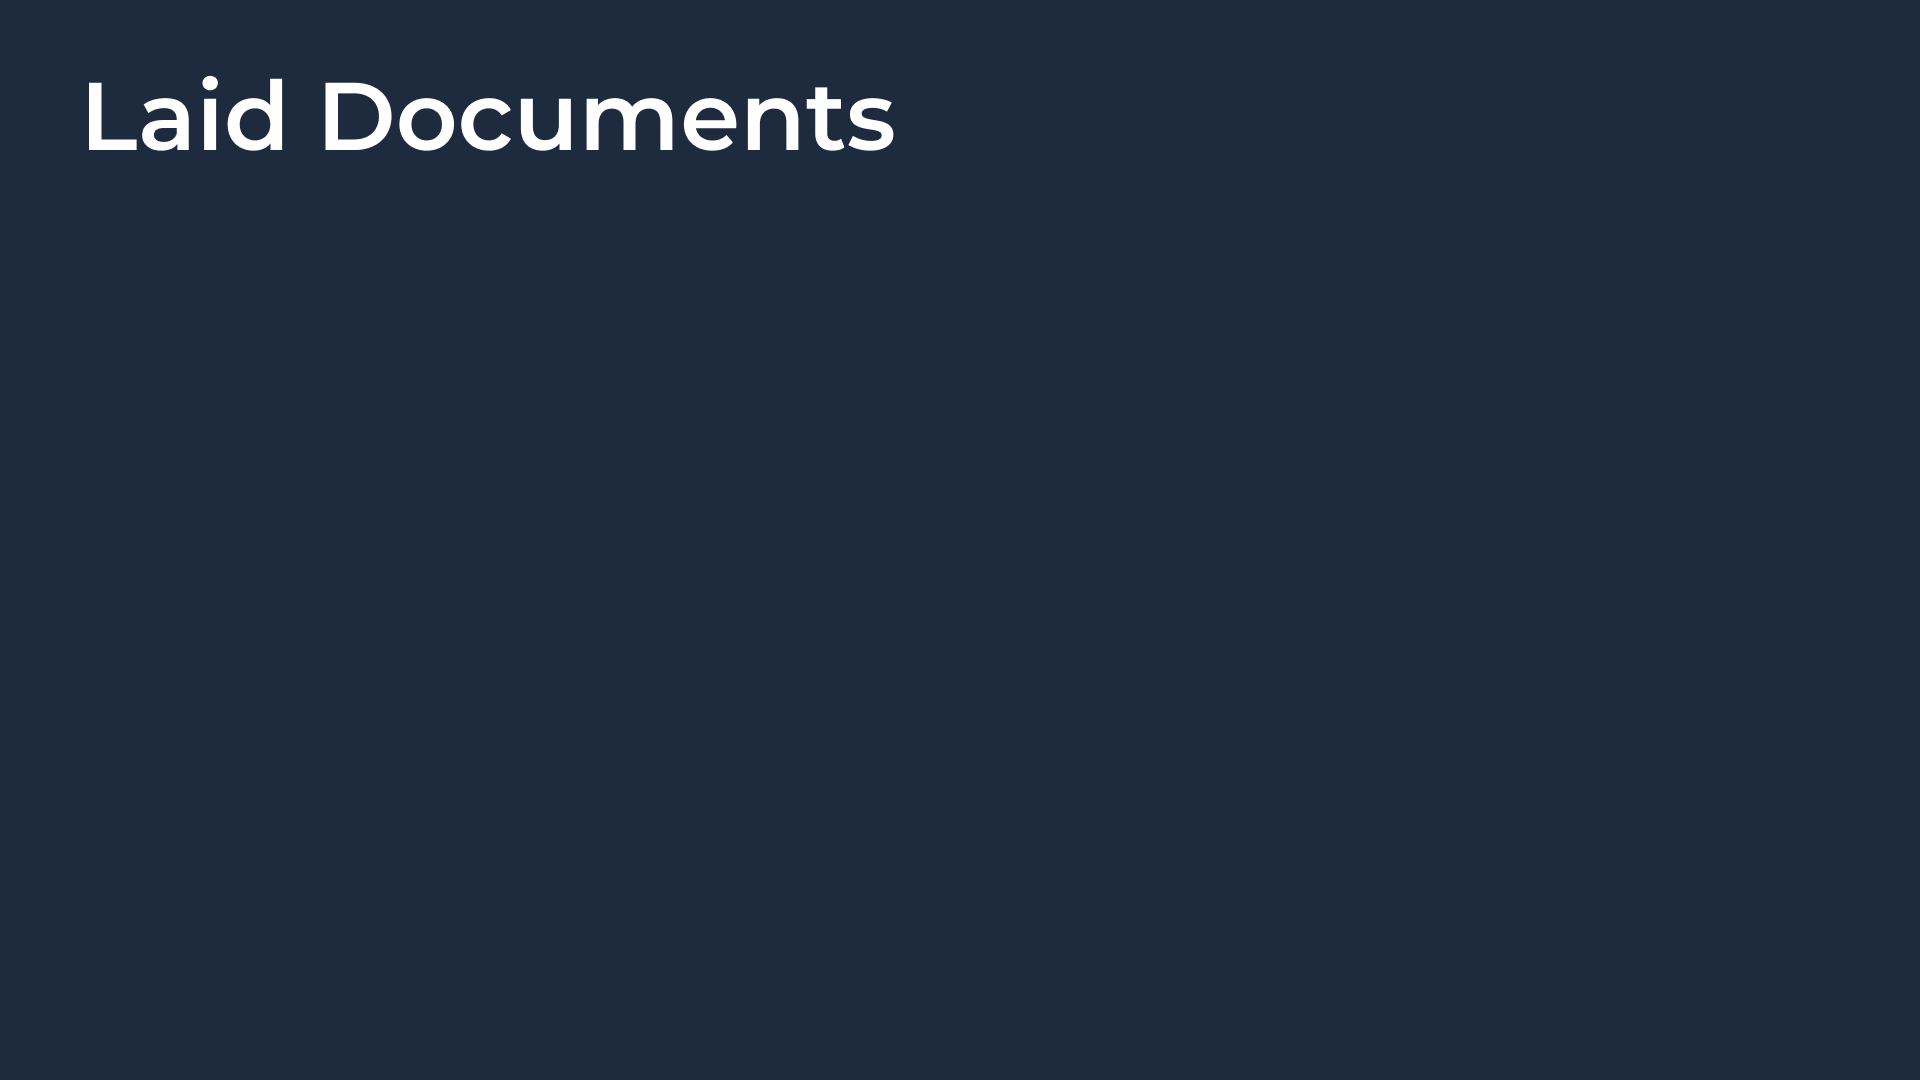 Laid Documents